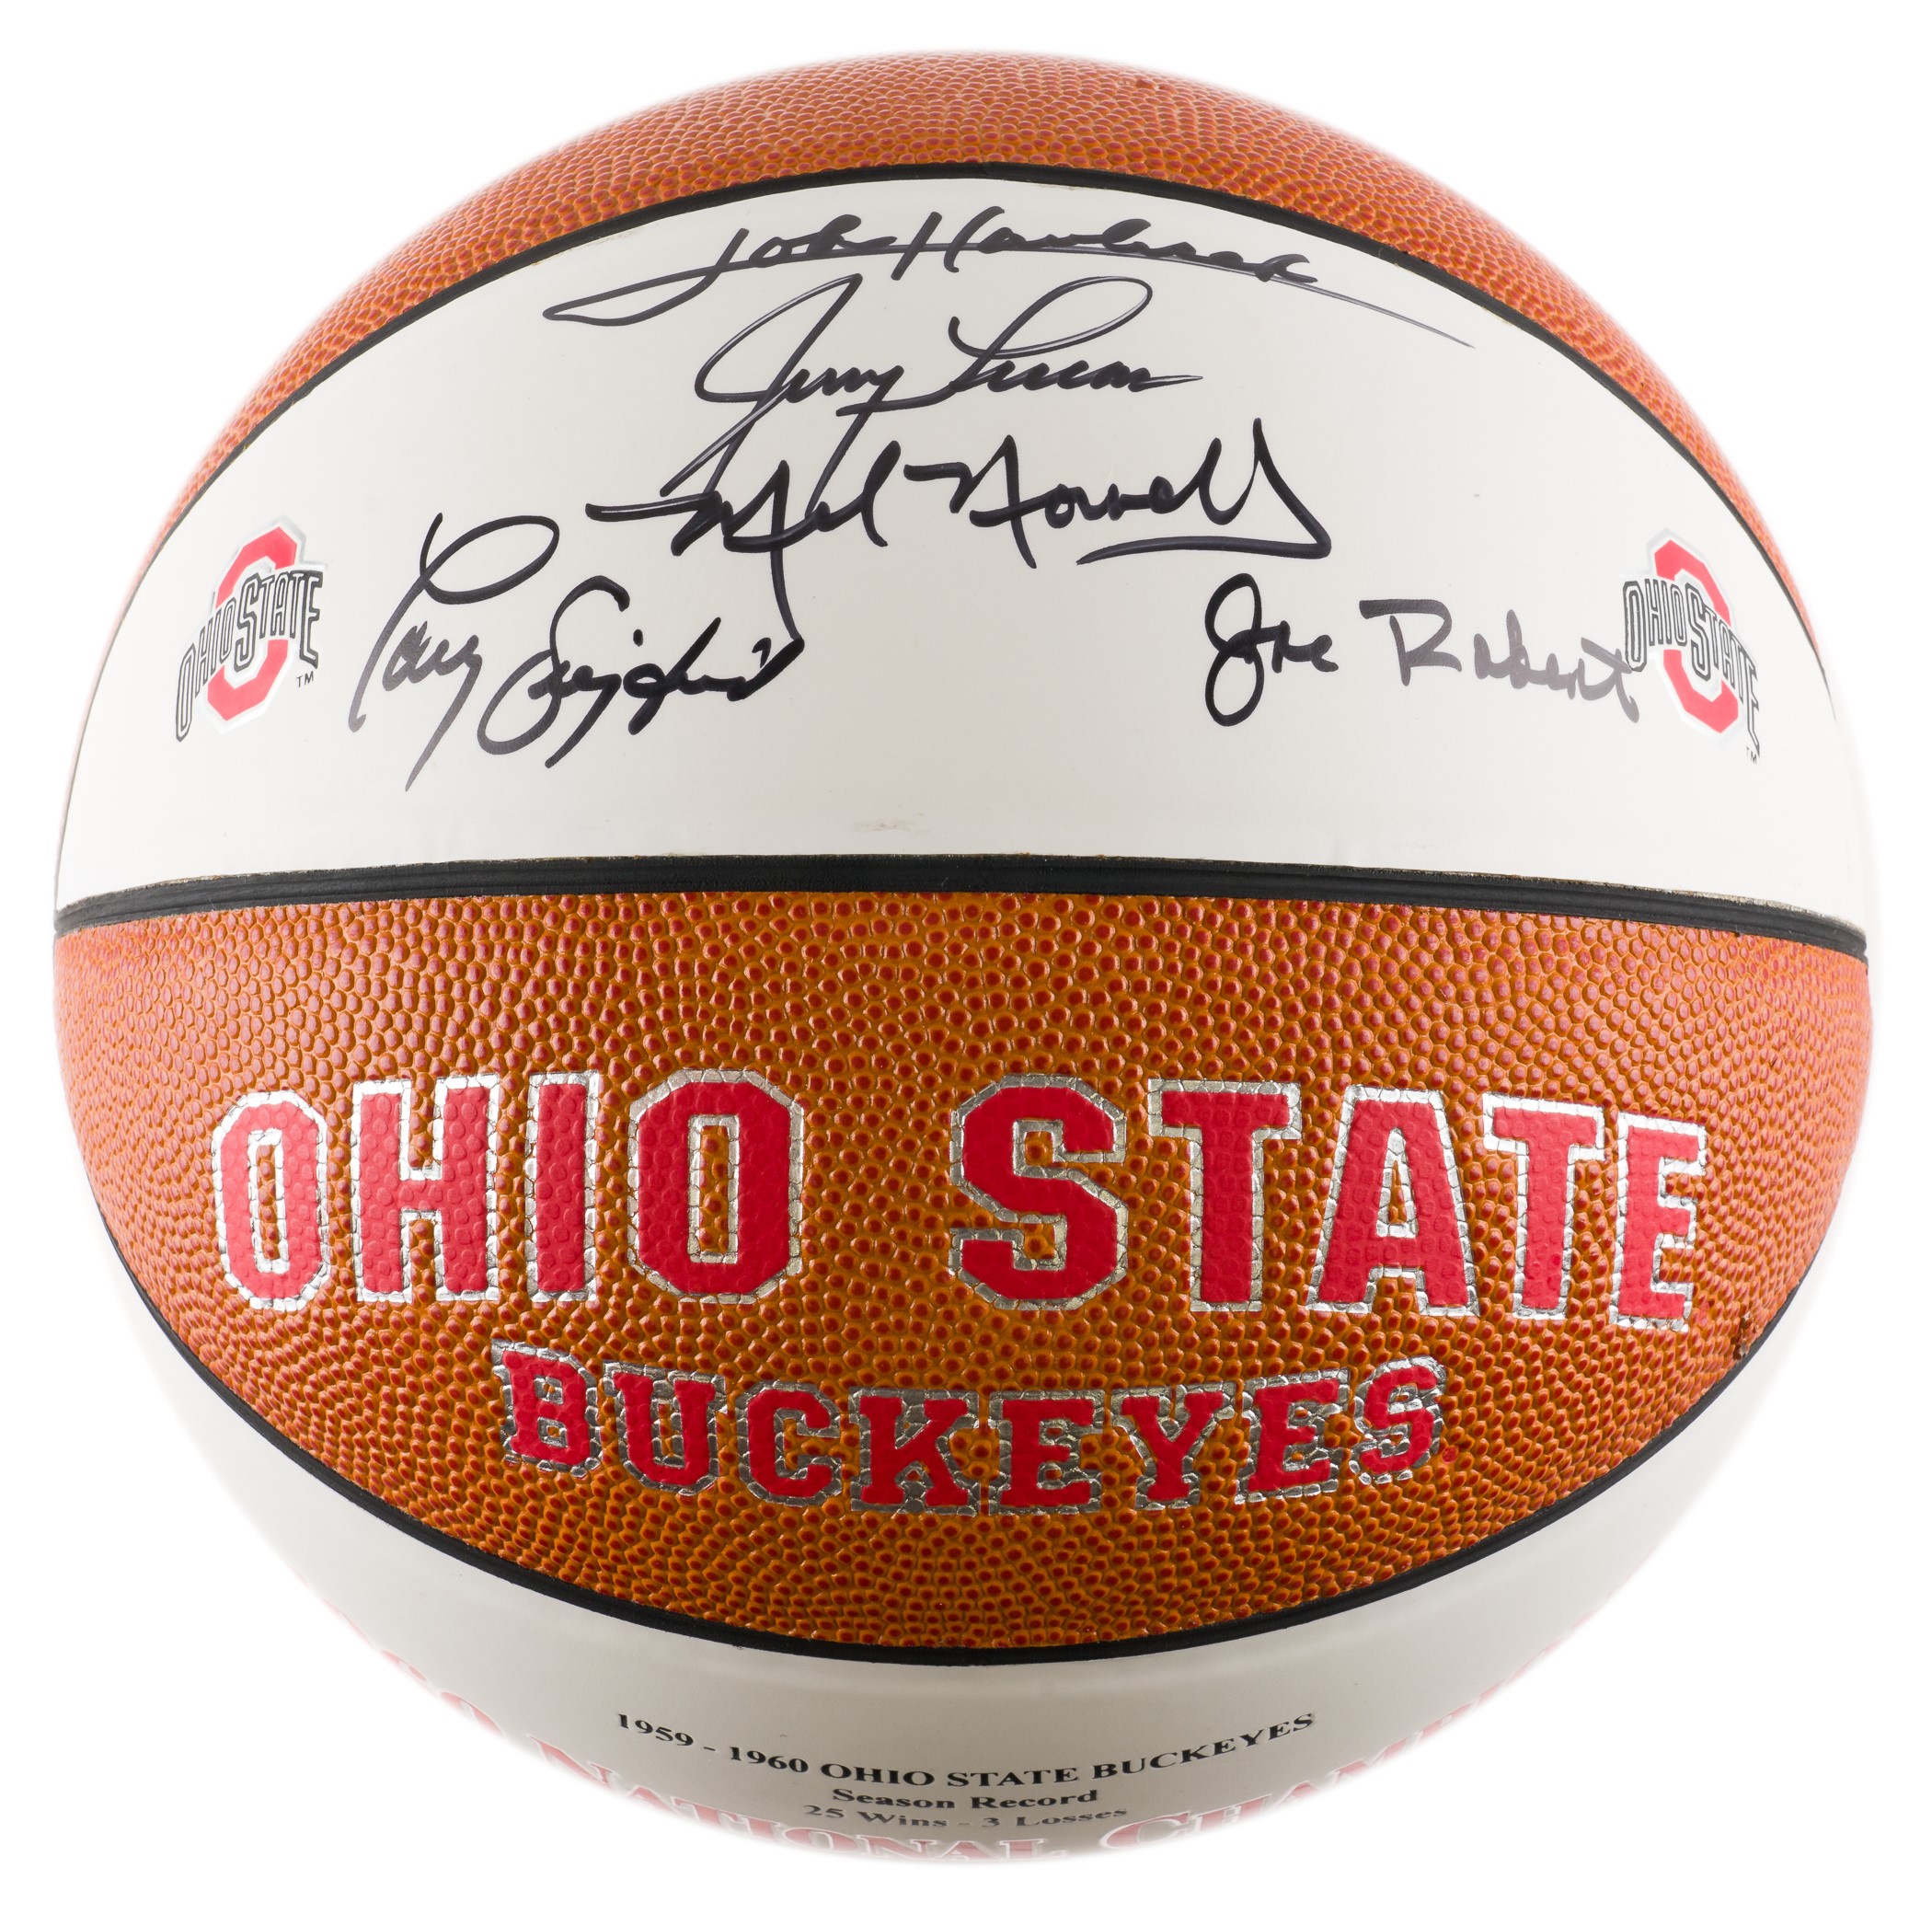 Ohio State Signed Basketballs, Collectible Ohio State Buckeyes Basketballs